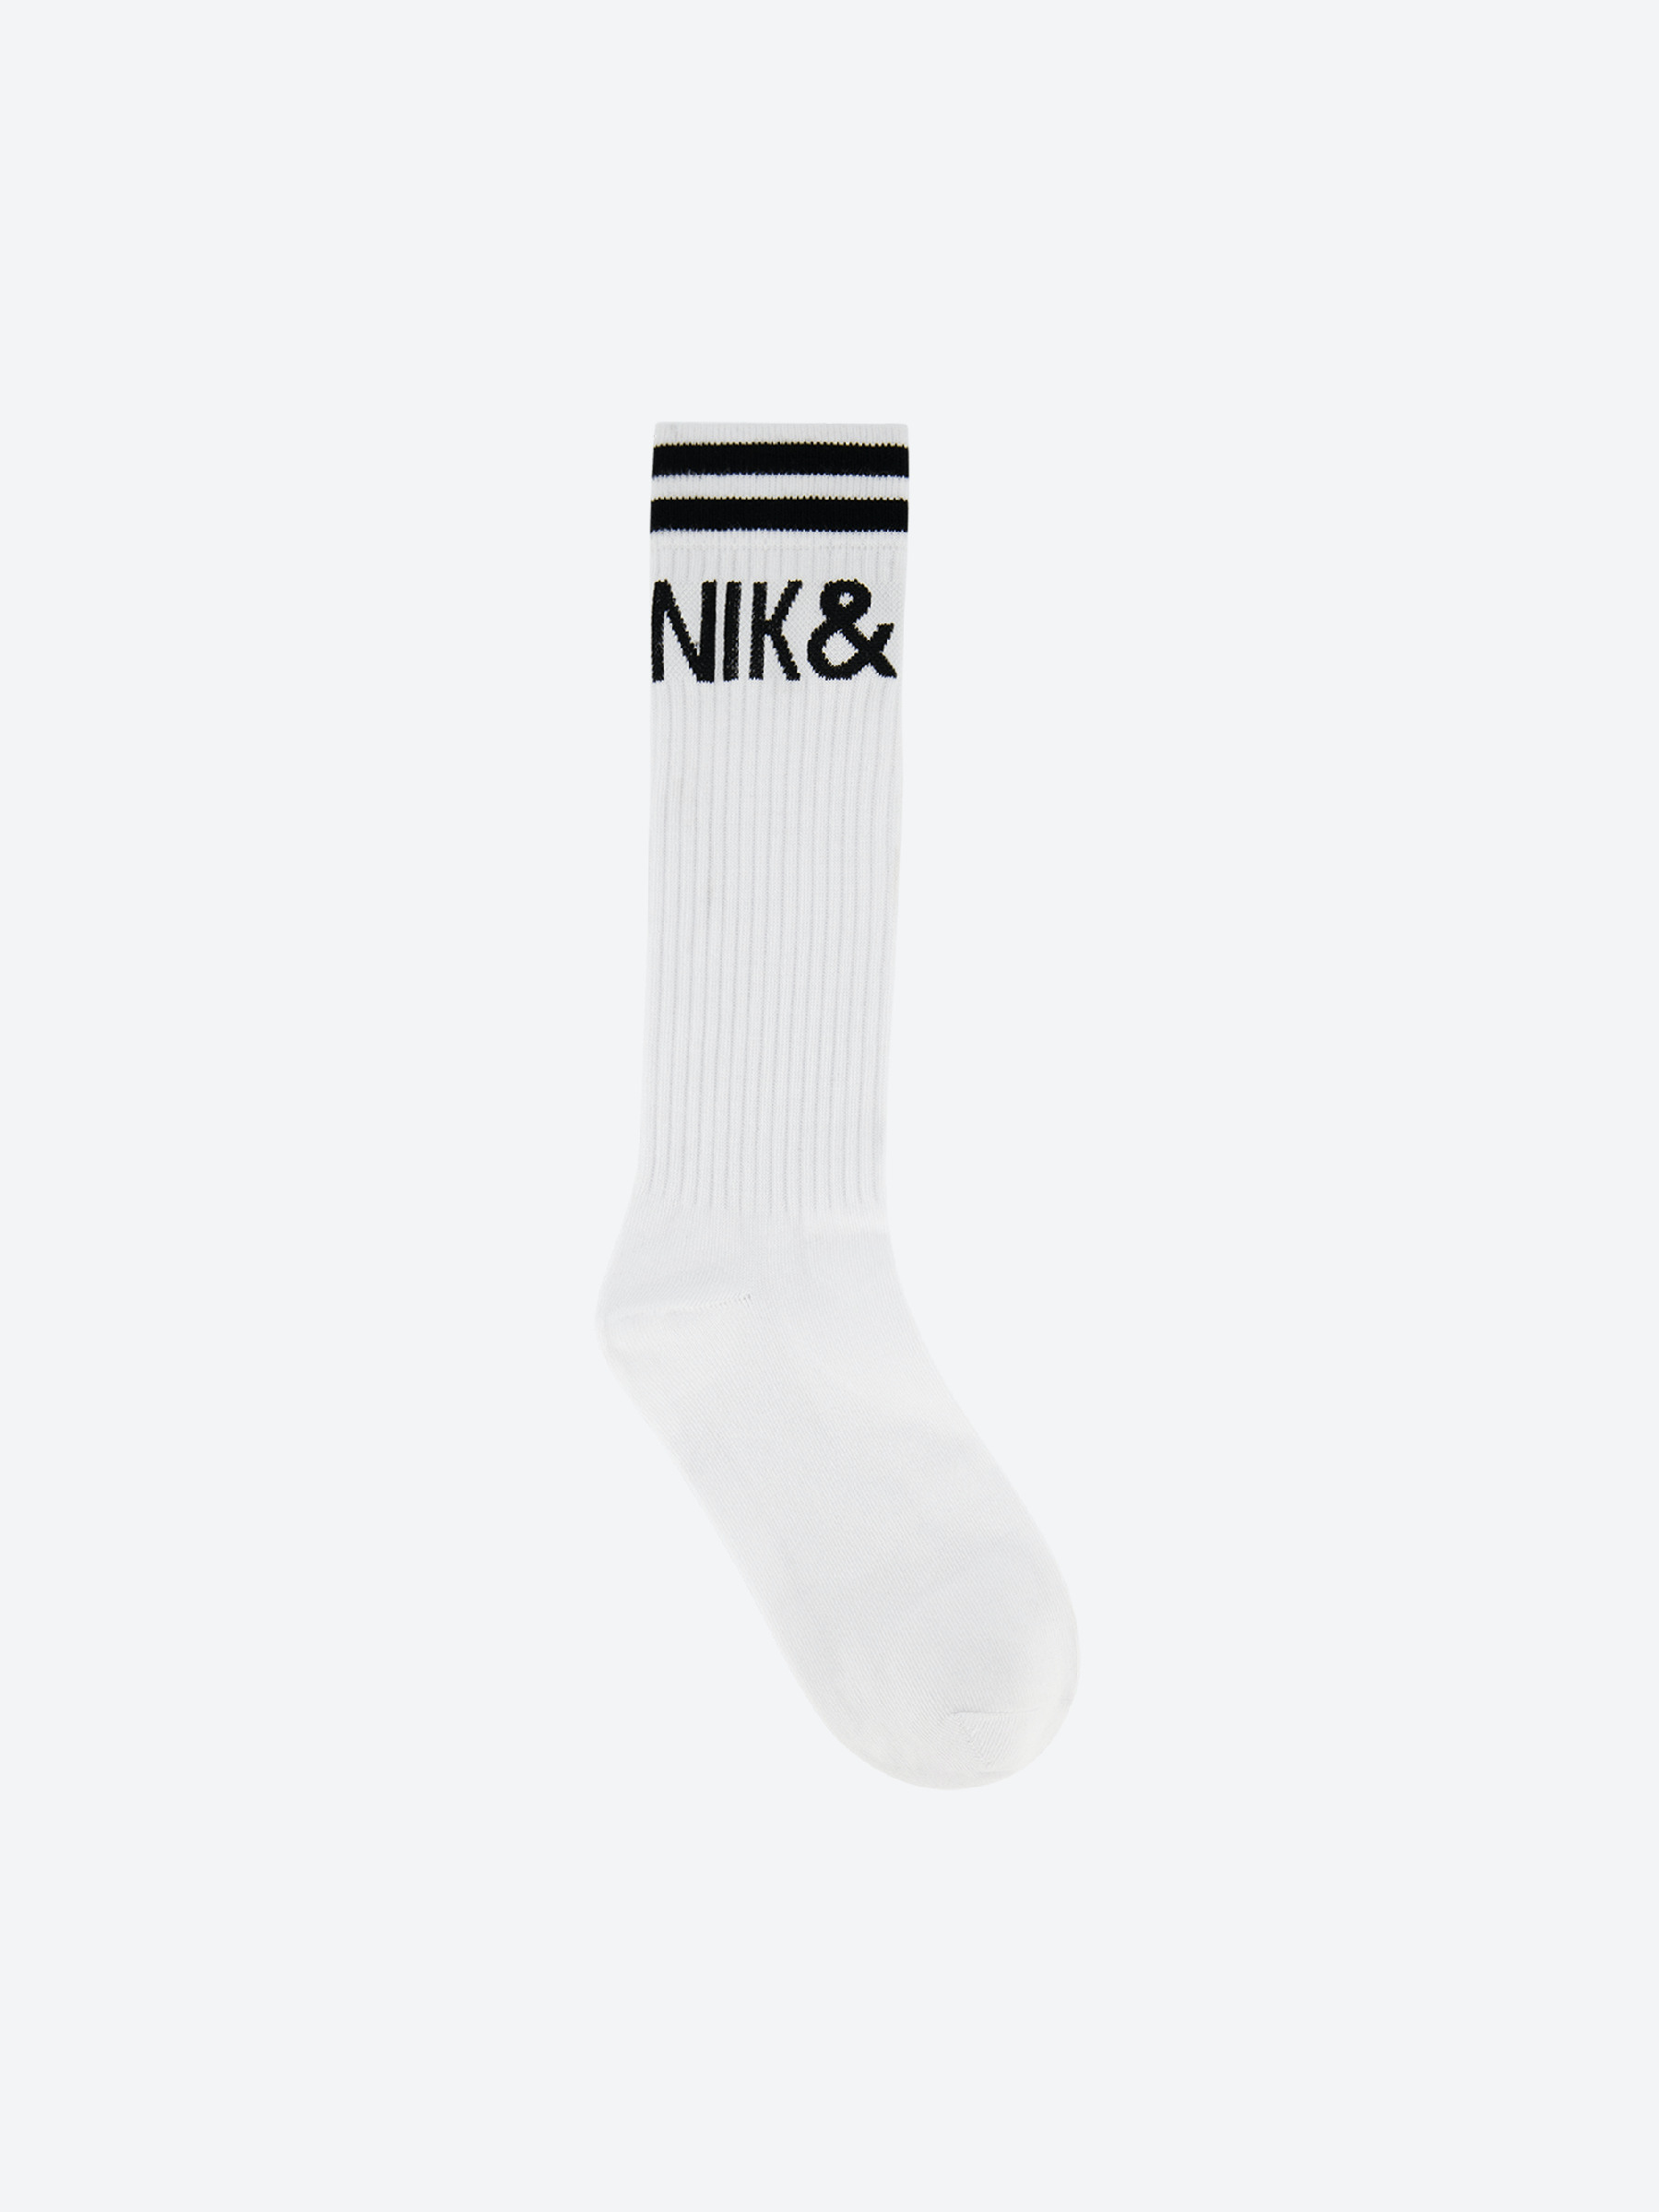 Meisjes Sporty Socks van Nik & Nik in de kleur White in maat 38/41.